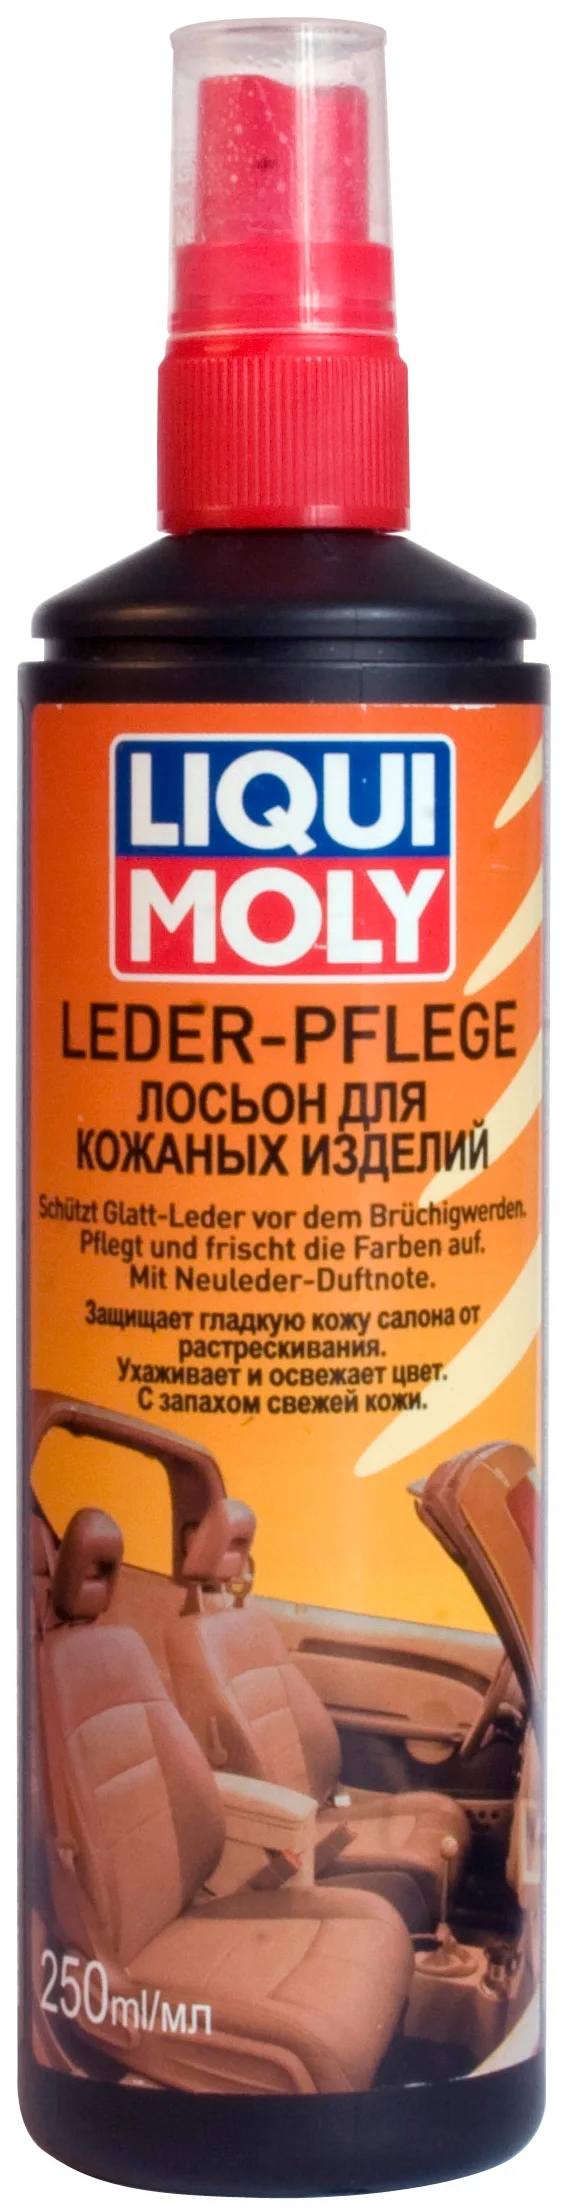 LIQUI MOLY Leder-Pflege 7631, 0.25 л - эффект: грязеотталкивающий